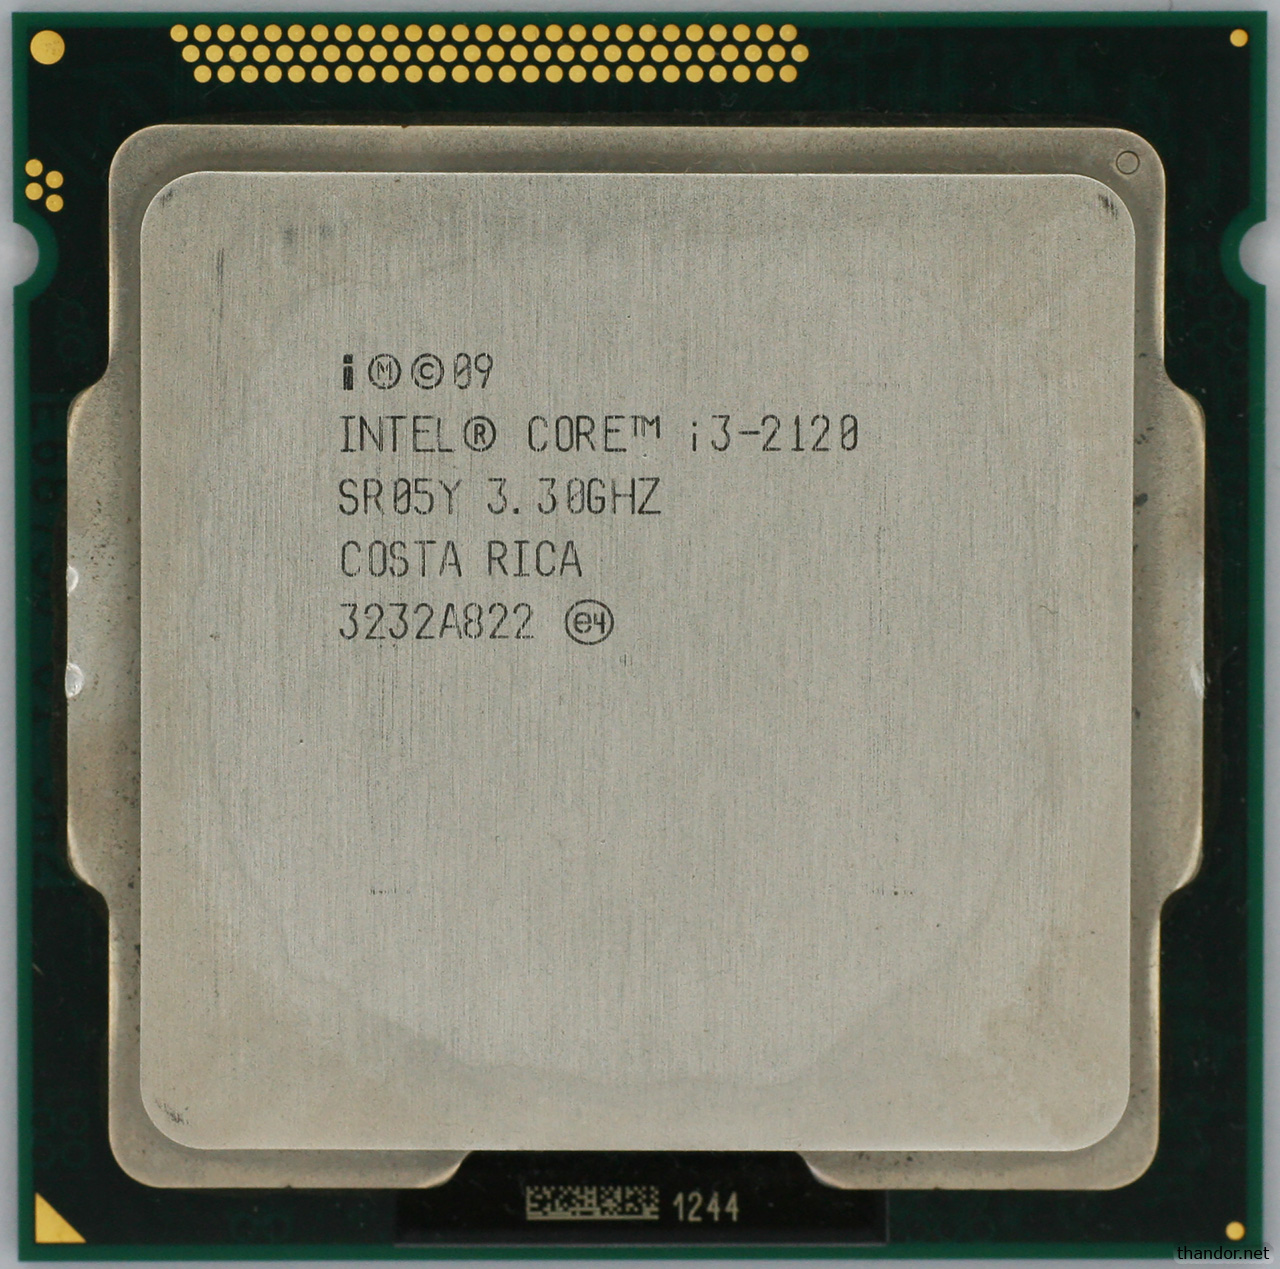 Intel(r) Core(TM) i3-2120 CPU @ 3.30GHZ 3.30 GHZ. Характеристики ноутбучного Intel i3-2120m. 2120 сокет